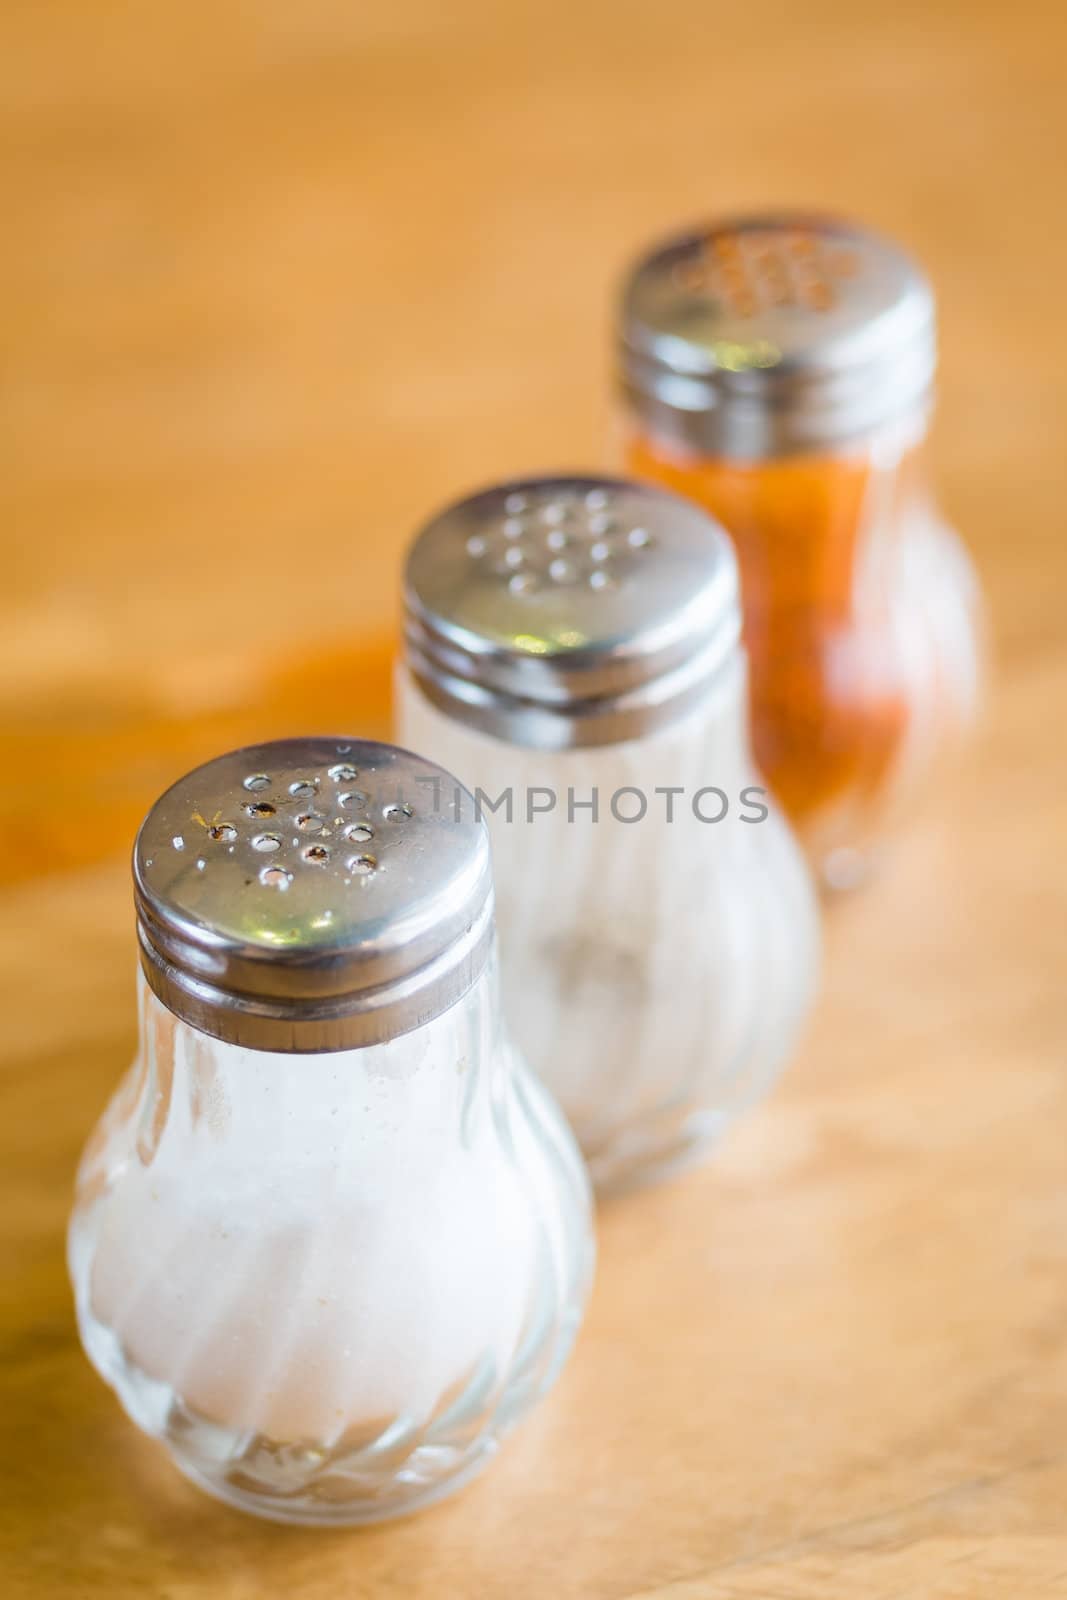 salt and pepper in shaker glass bottle on wood table by moggara12